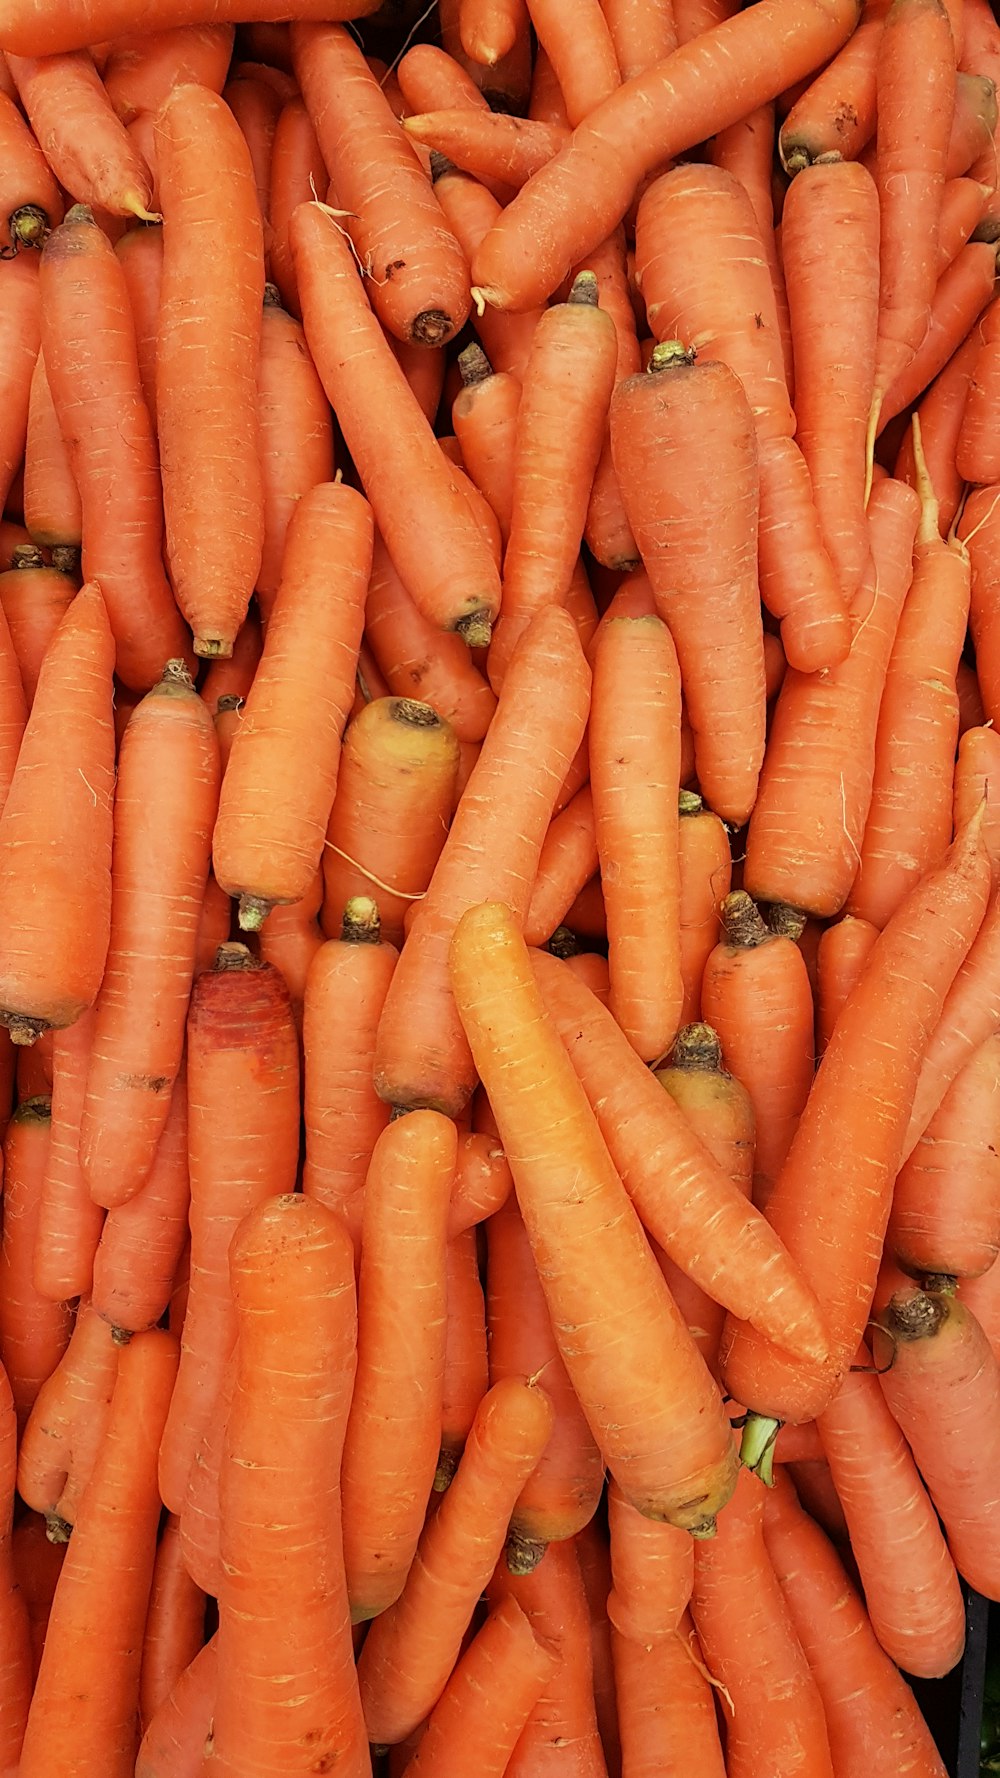 carottes orange sur la main humaine